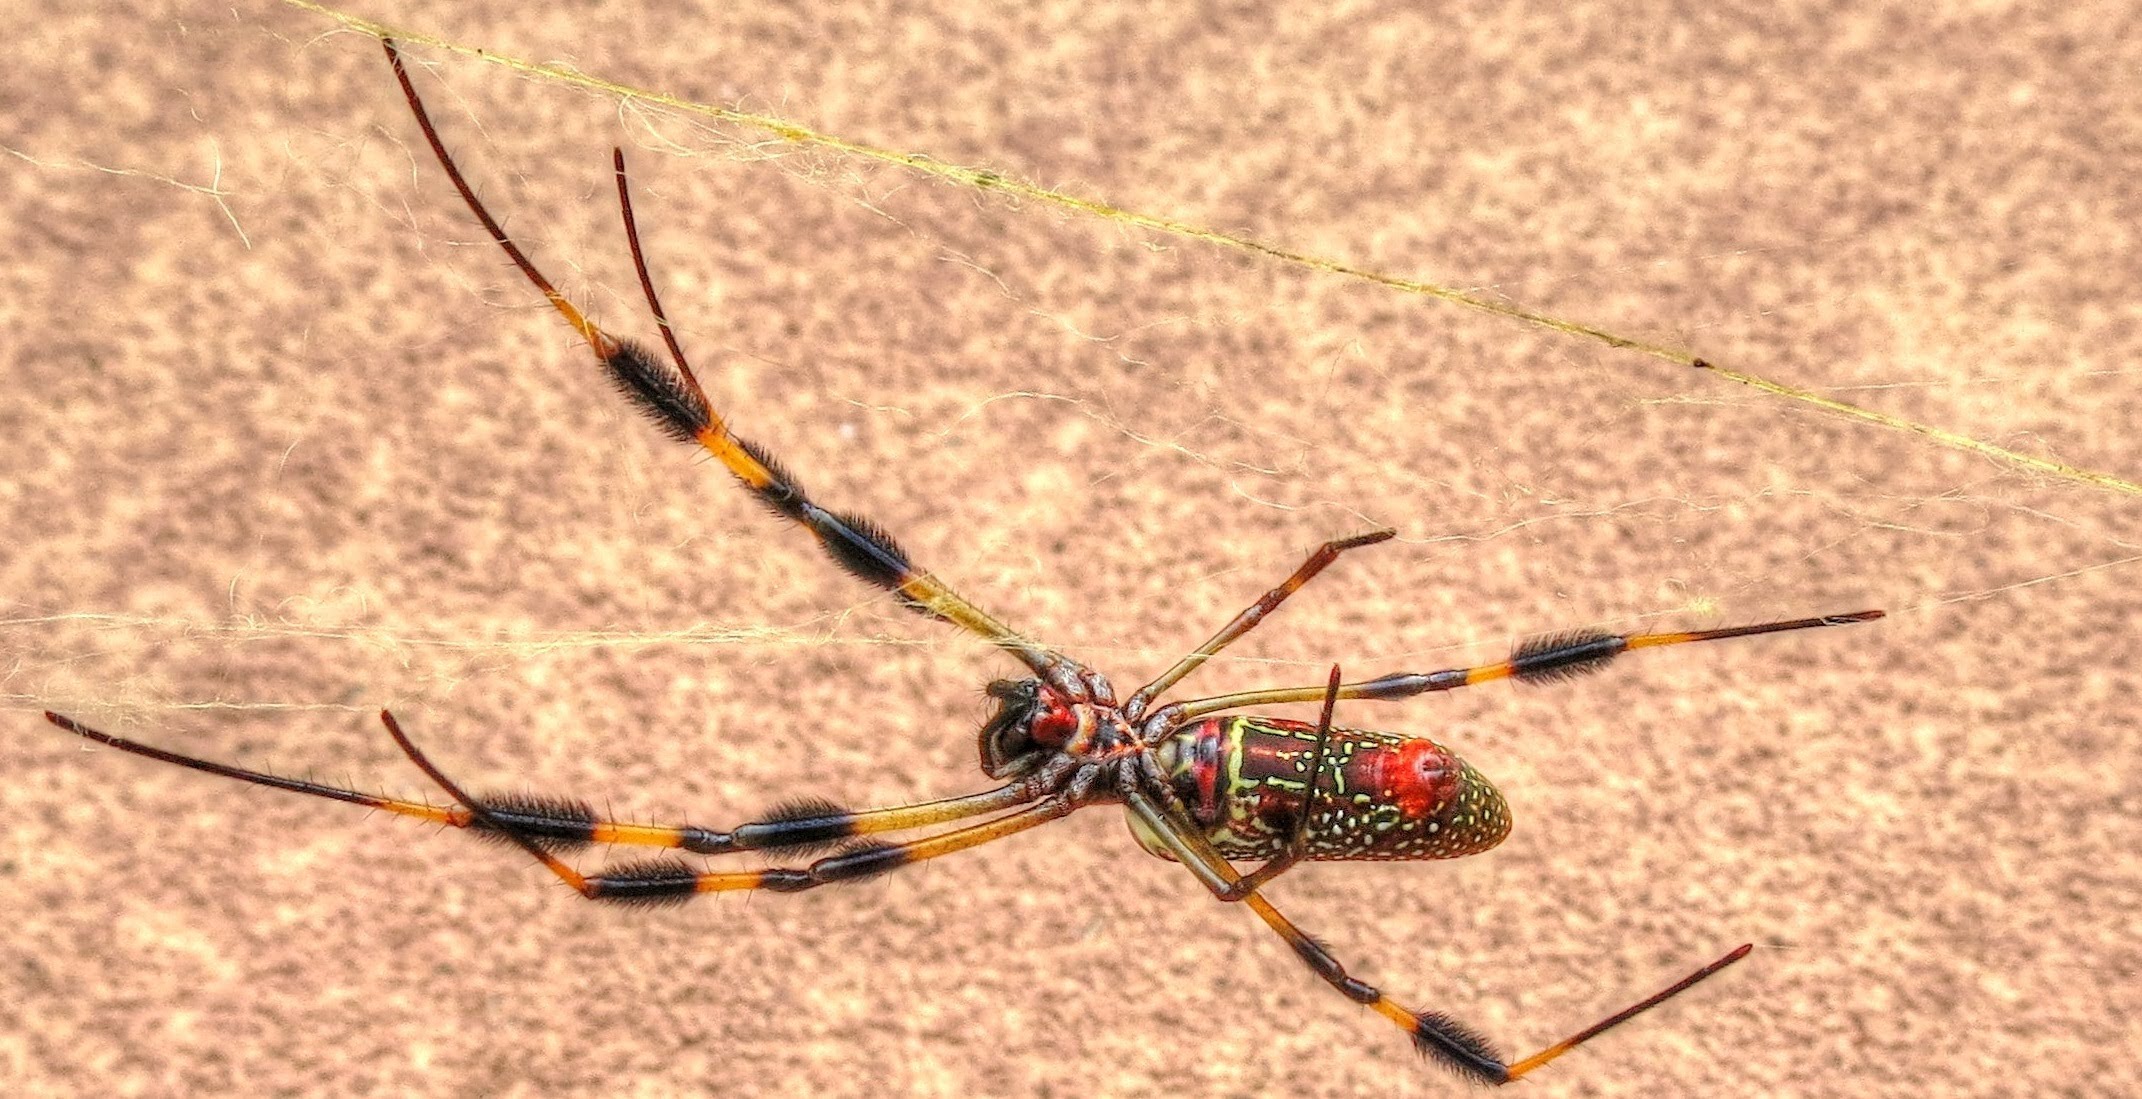 Golden Silk Orb Weaver Spider Web Strength Test (Part II) - YouTube